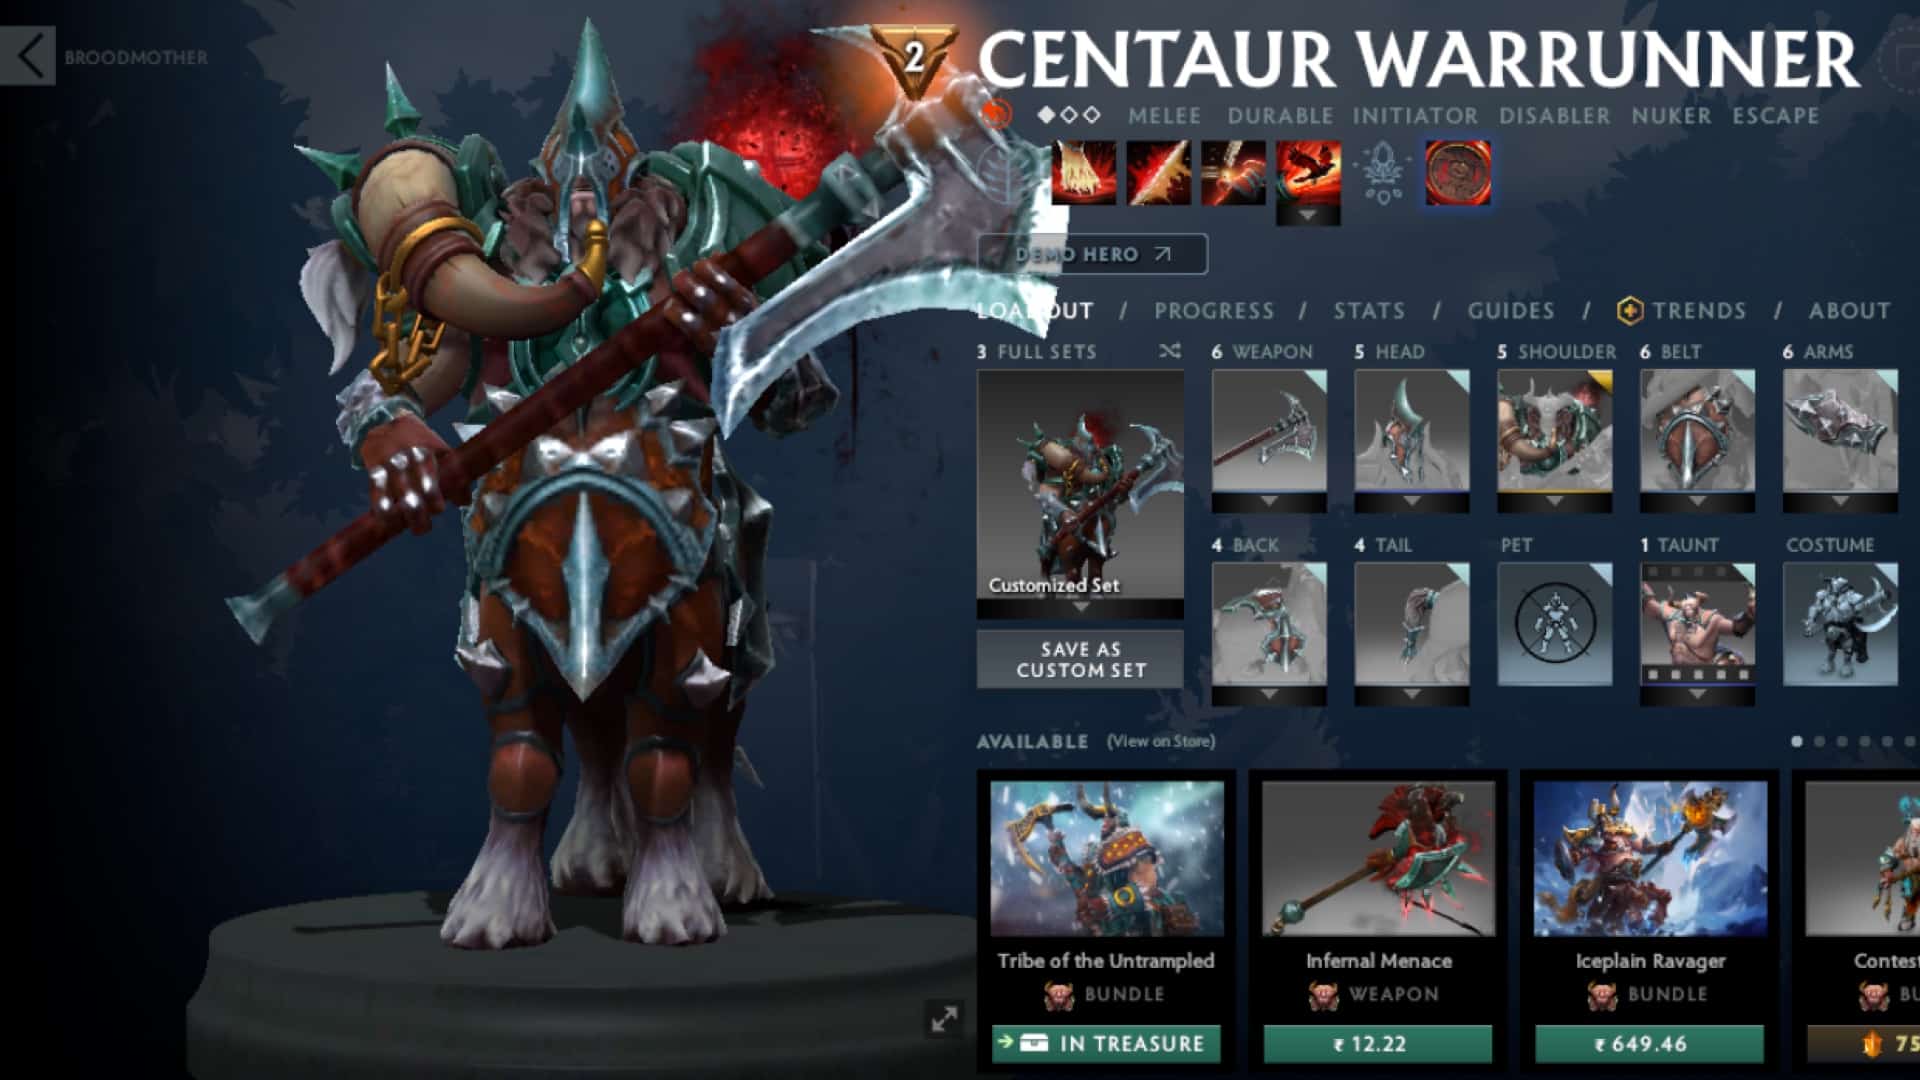 Centaur Warrunner helps Ancient Apparition kill enemies